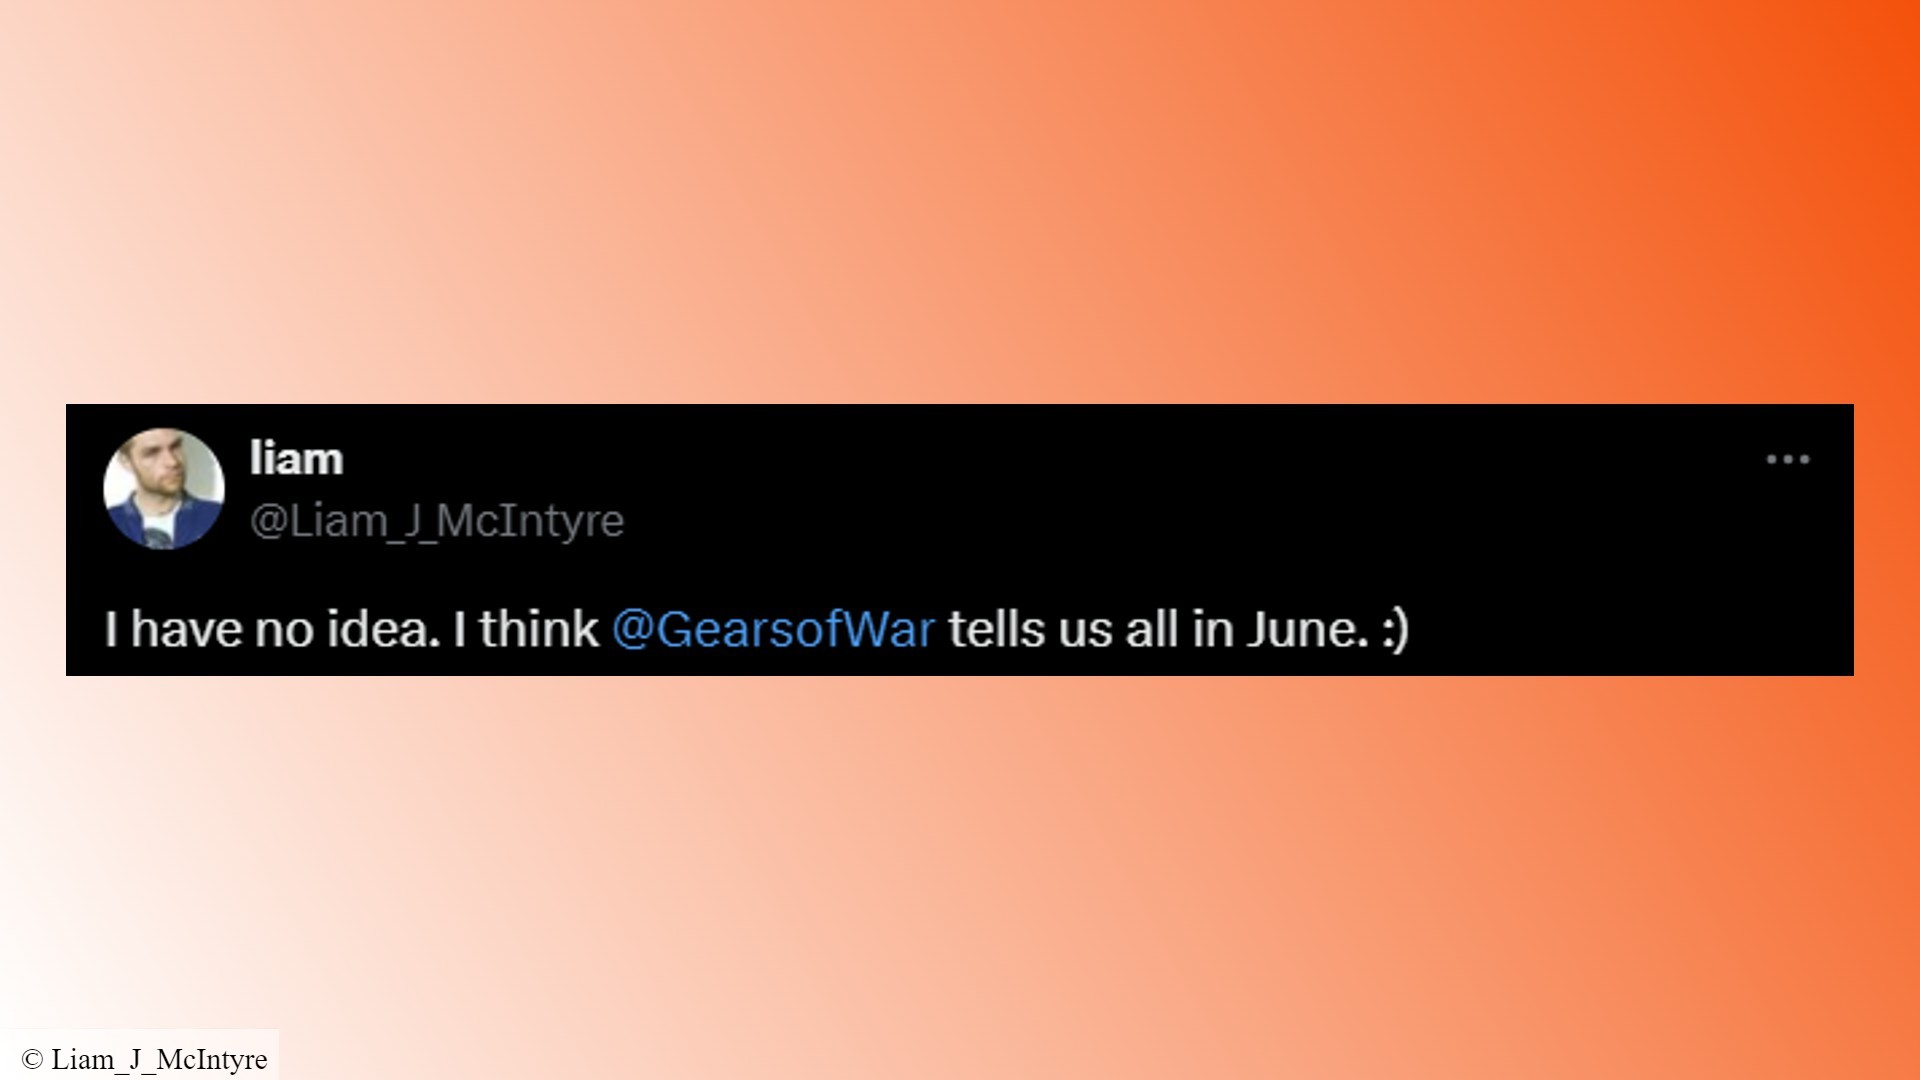 Gears of War 6 reveal: A tweet from Gears 5 actor Liam McIntyre